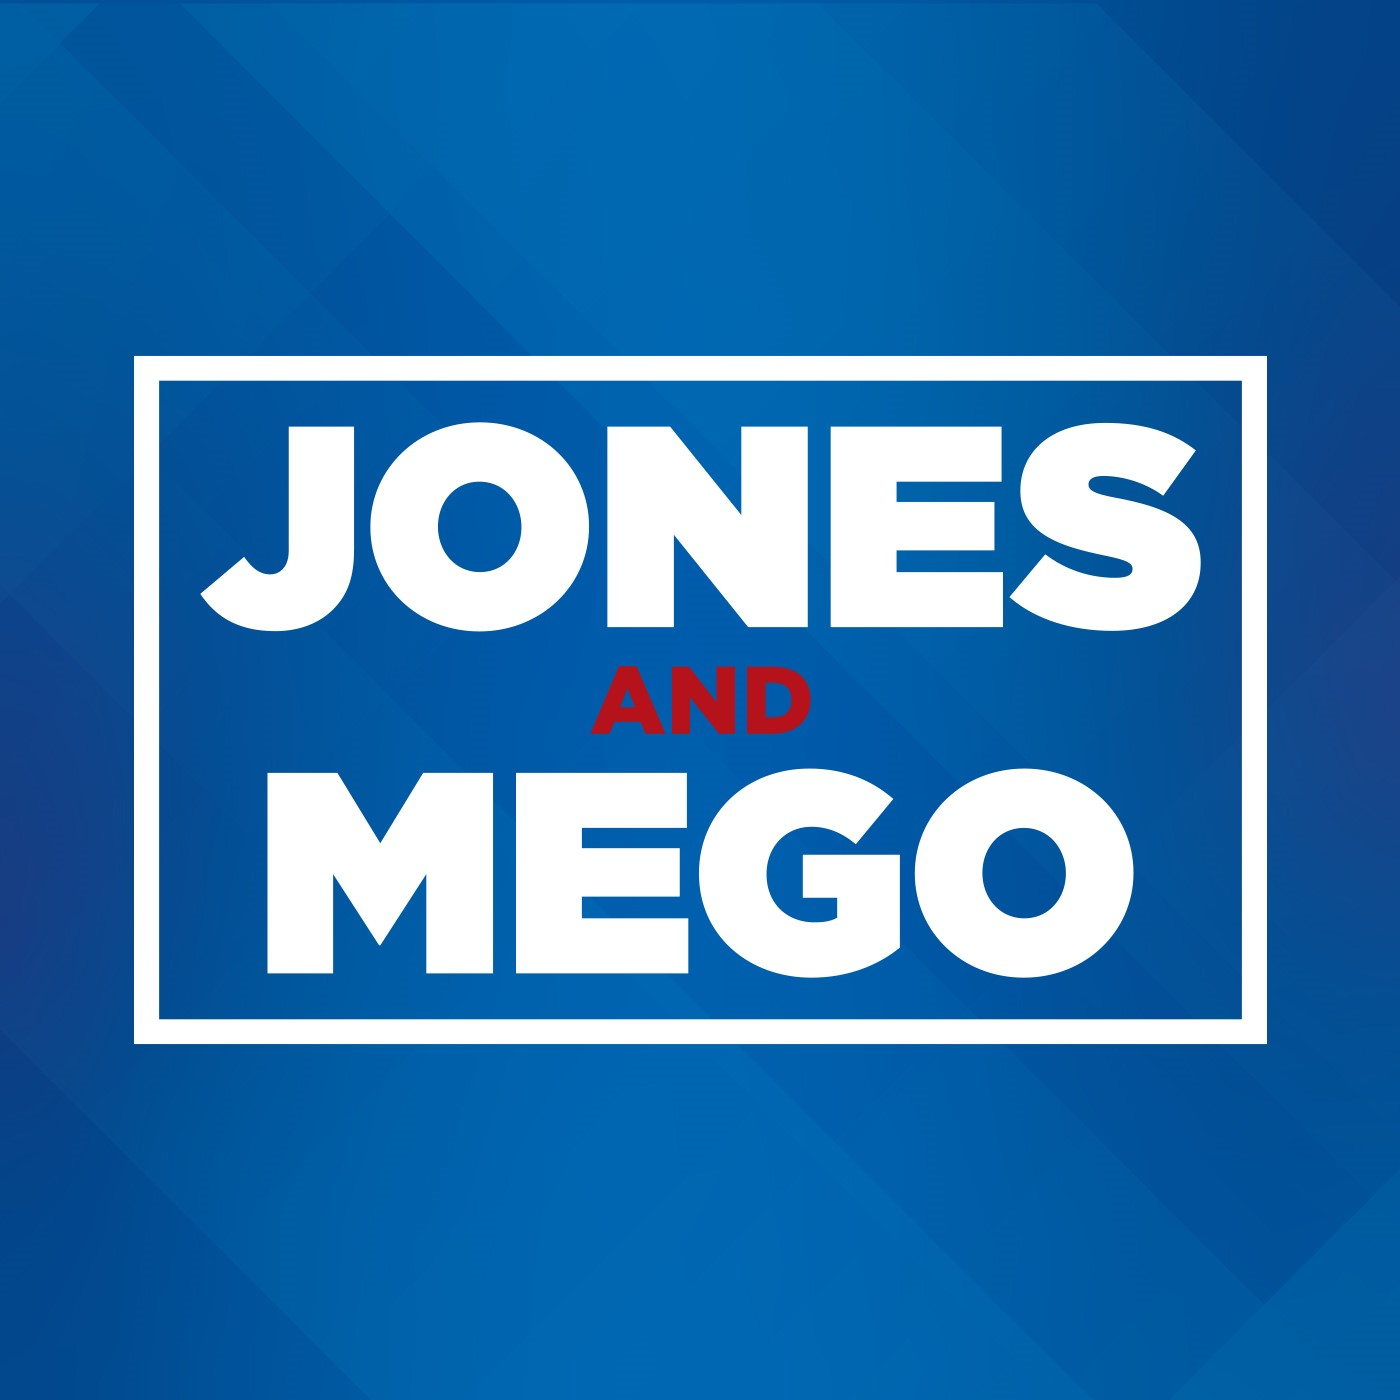 Jones and Mego revisit Spygate!